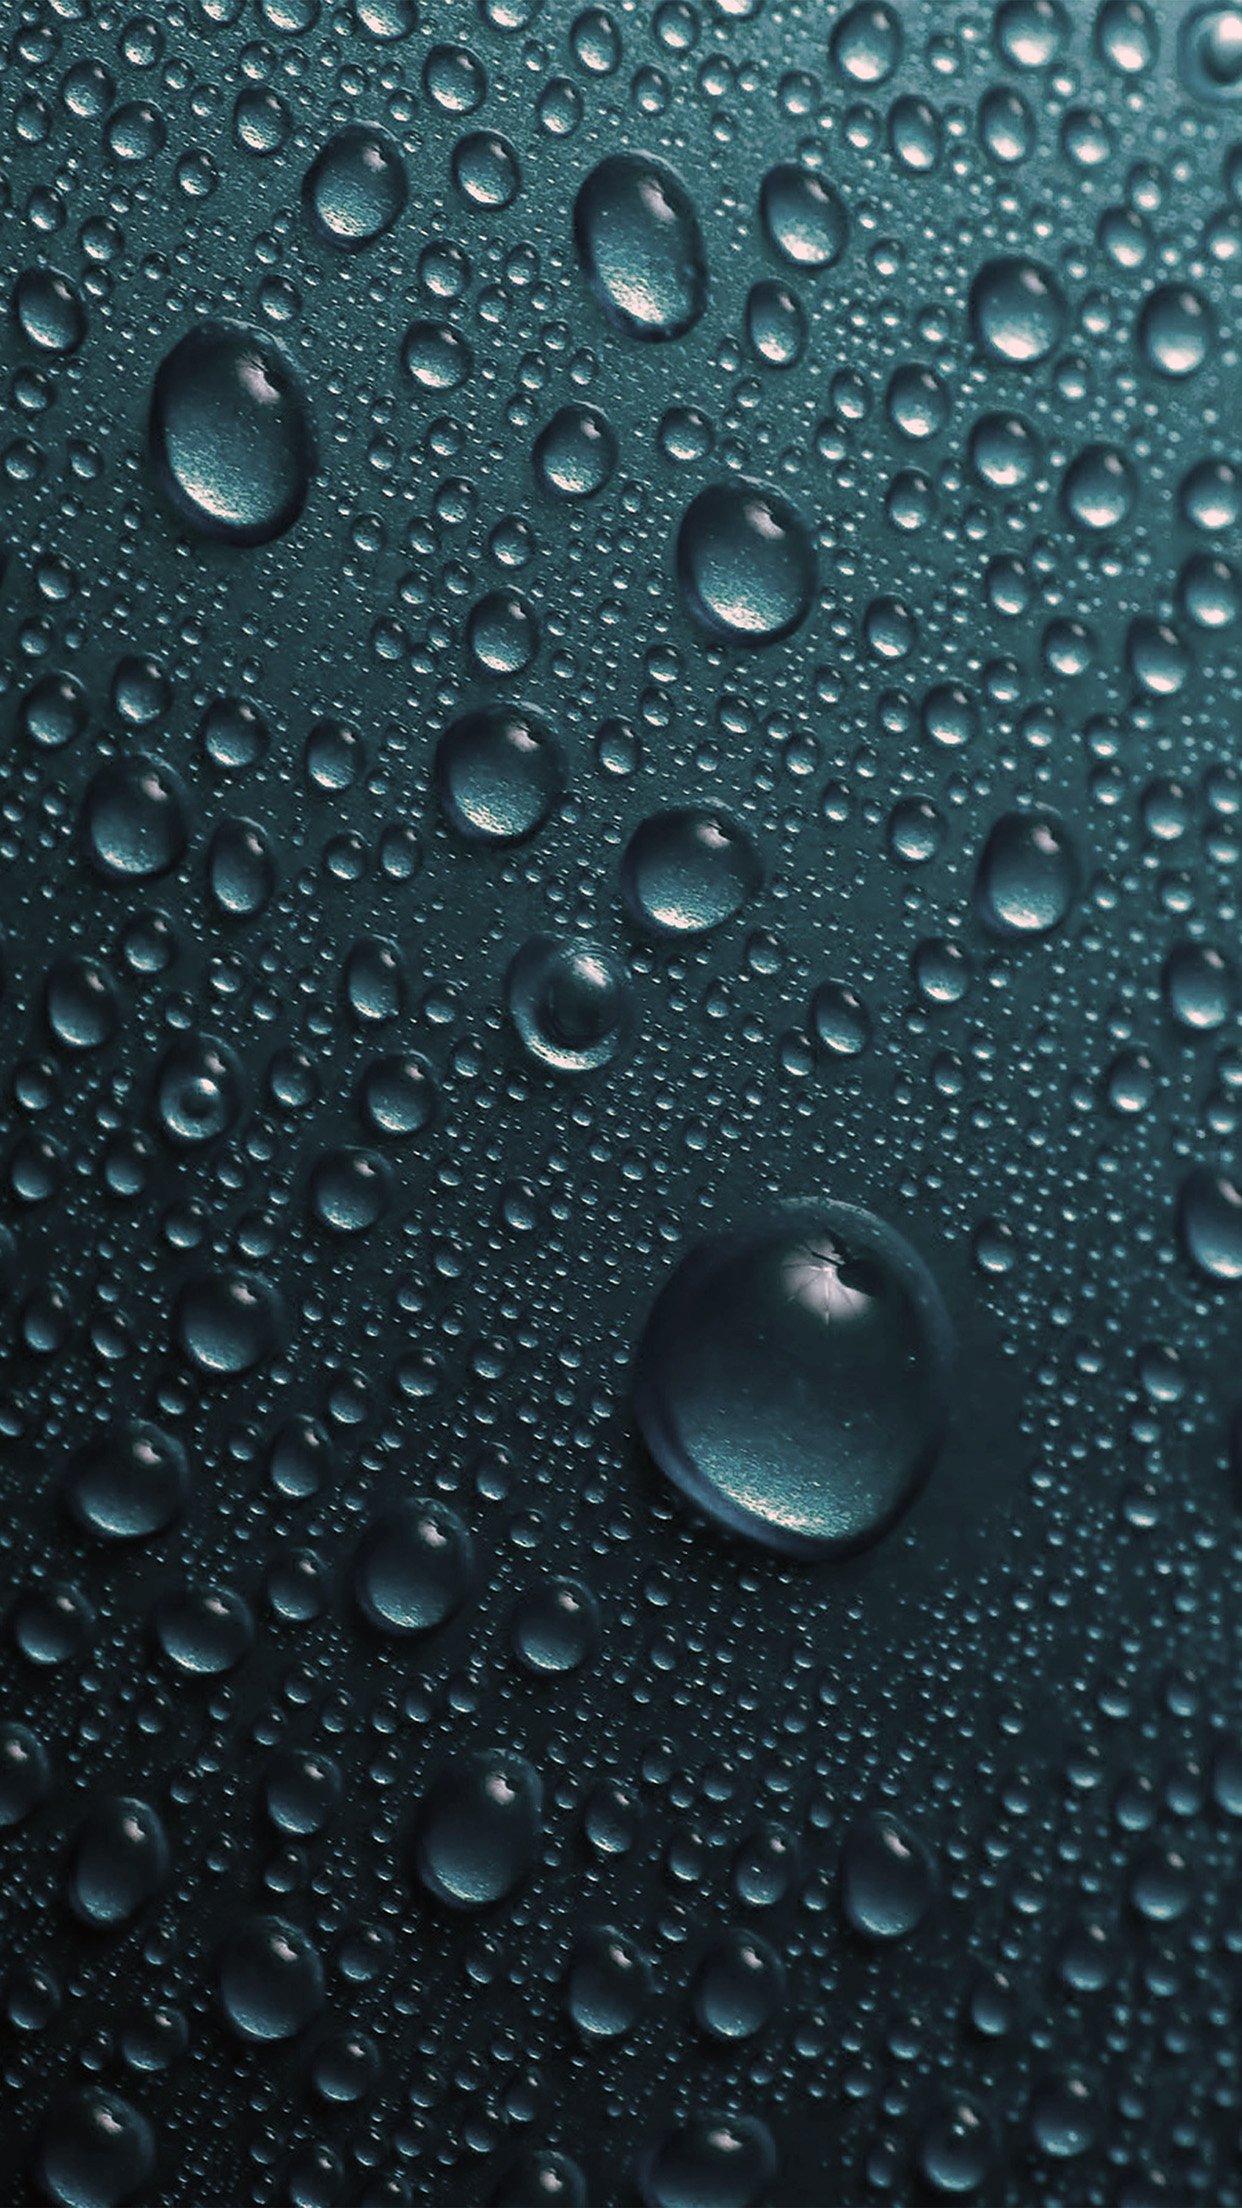 iPhone7 wallpaper. rain drop blue water